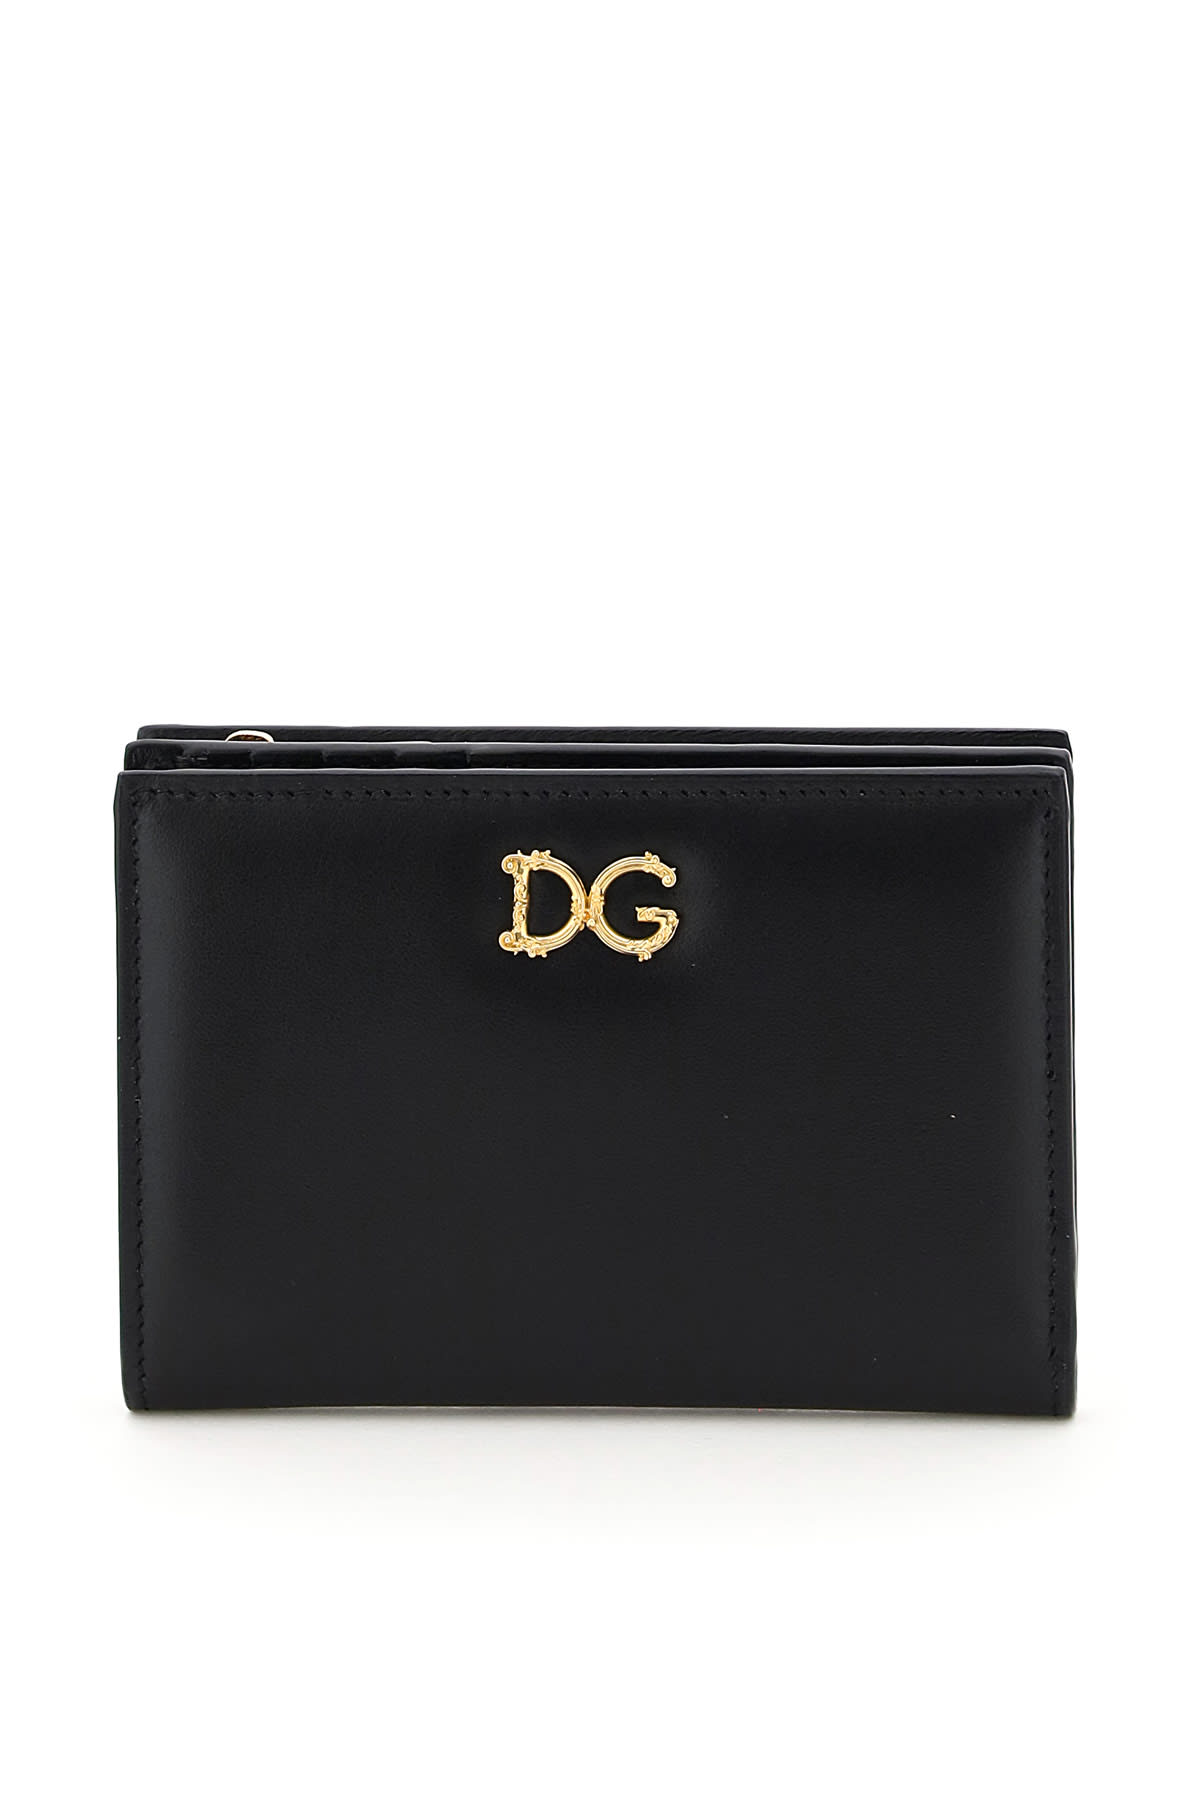 Dolce & Gabbana Baroque Dg Wallet